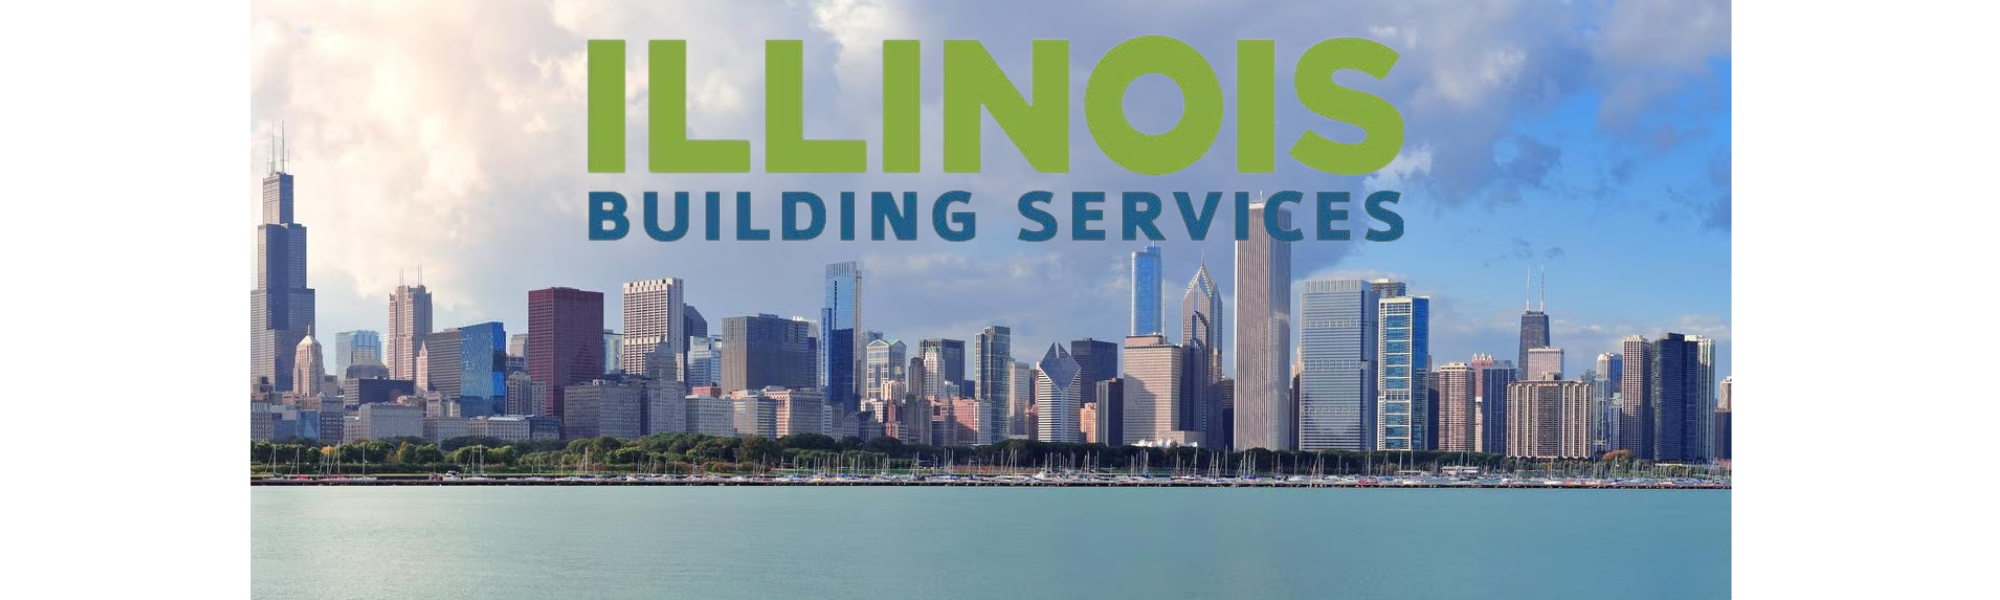 Illinois Building Services